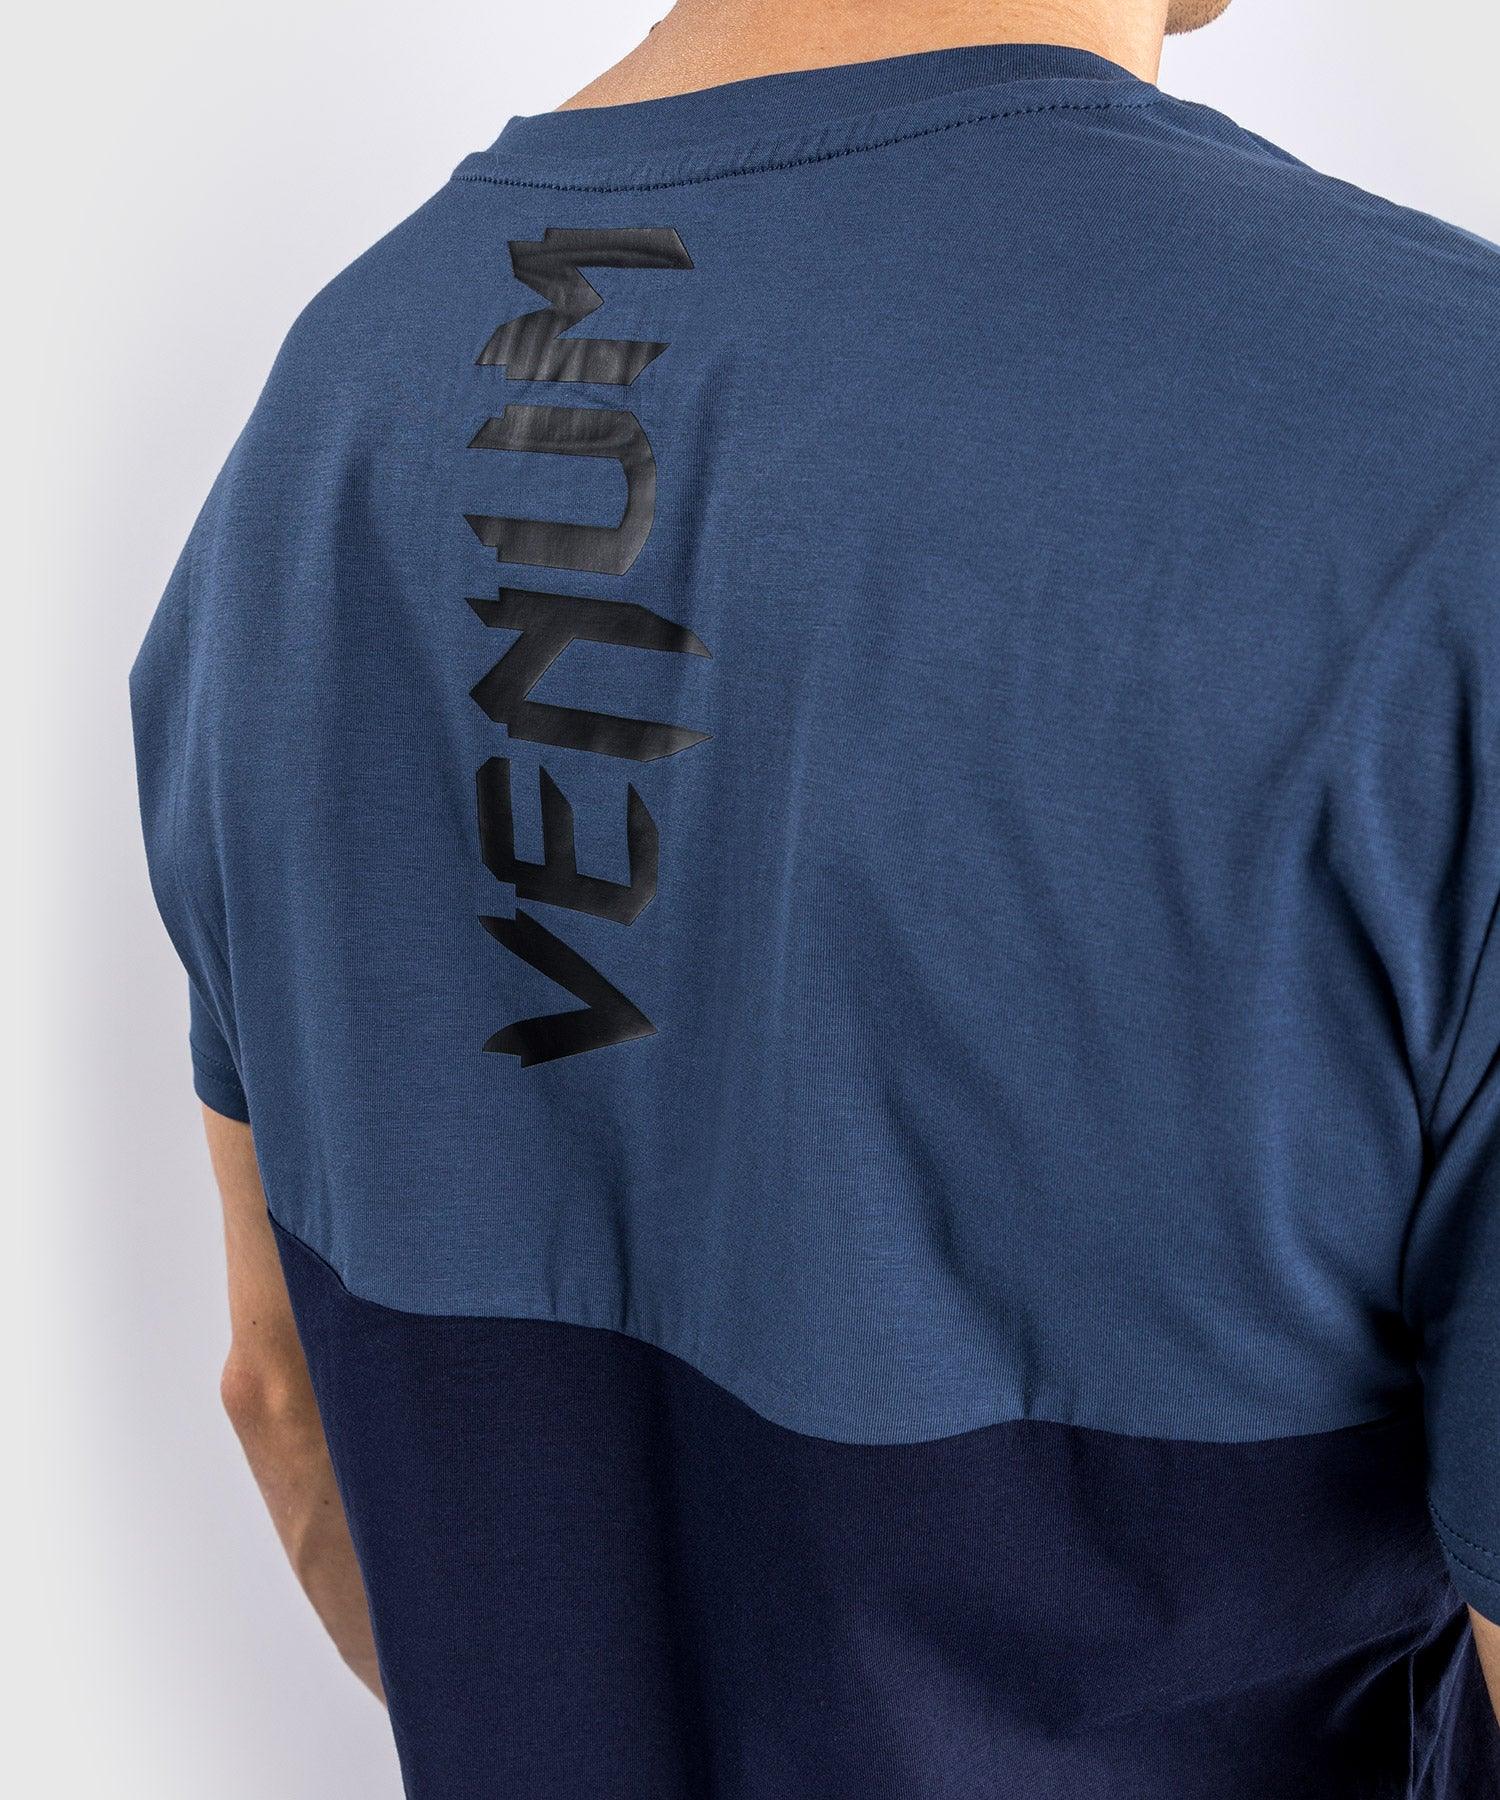 Venum Laser T-shirt - Navy Blue